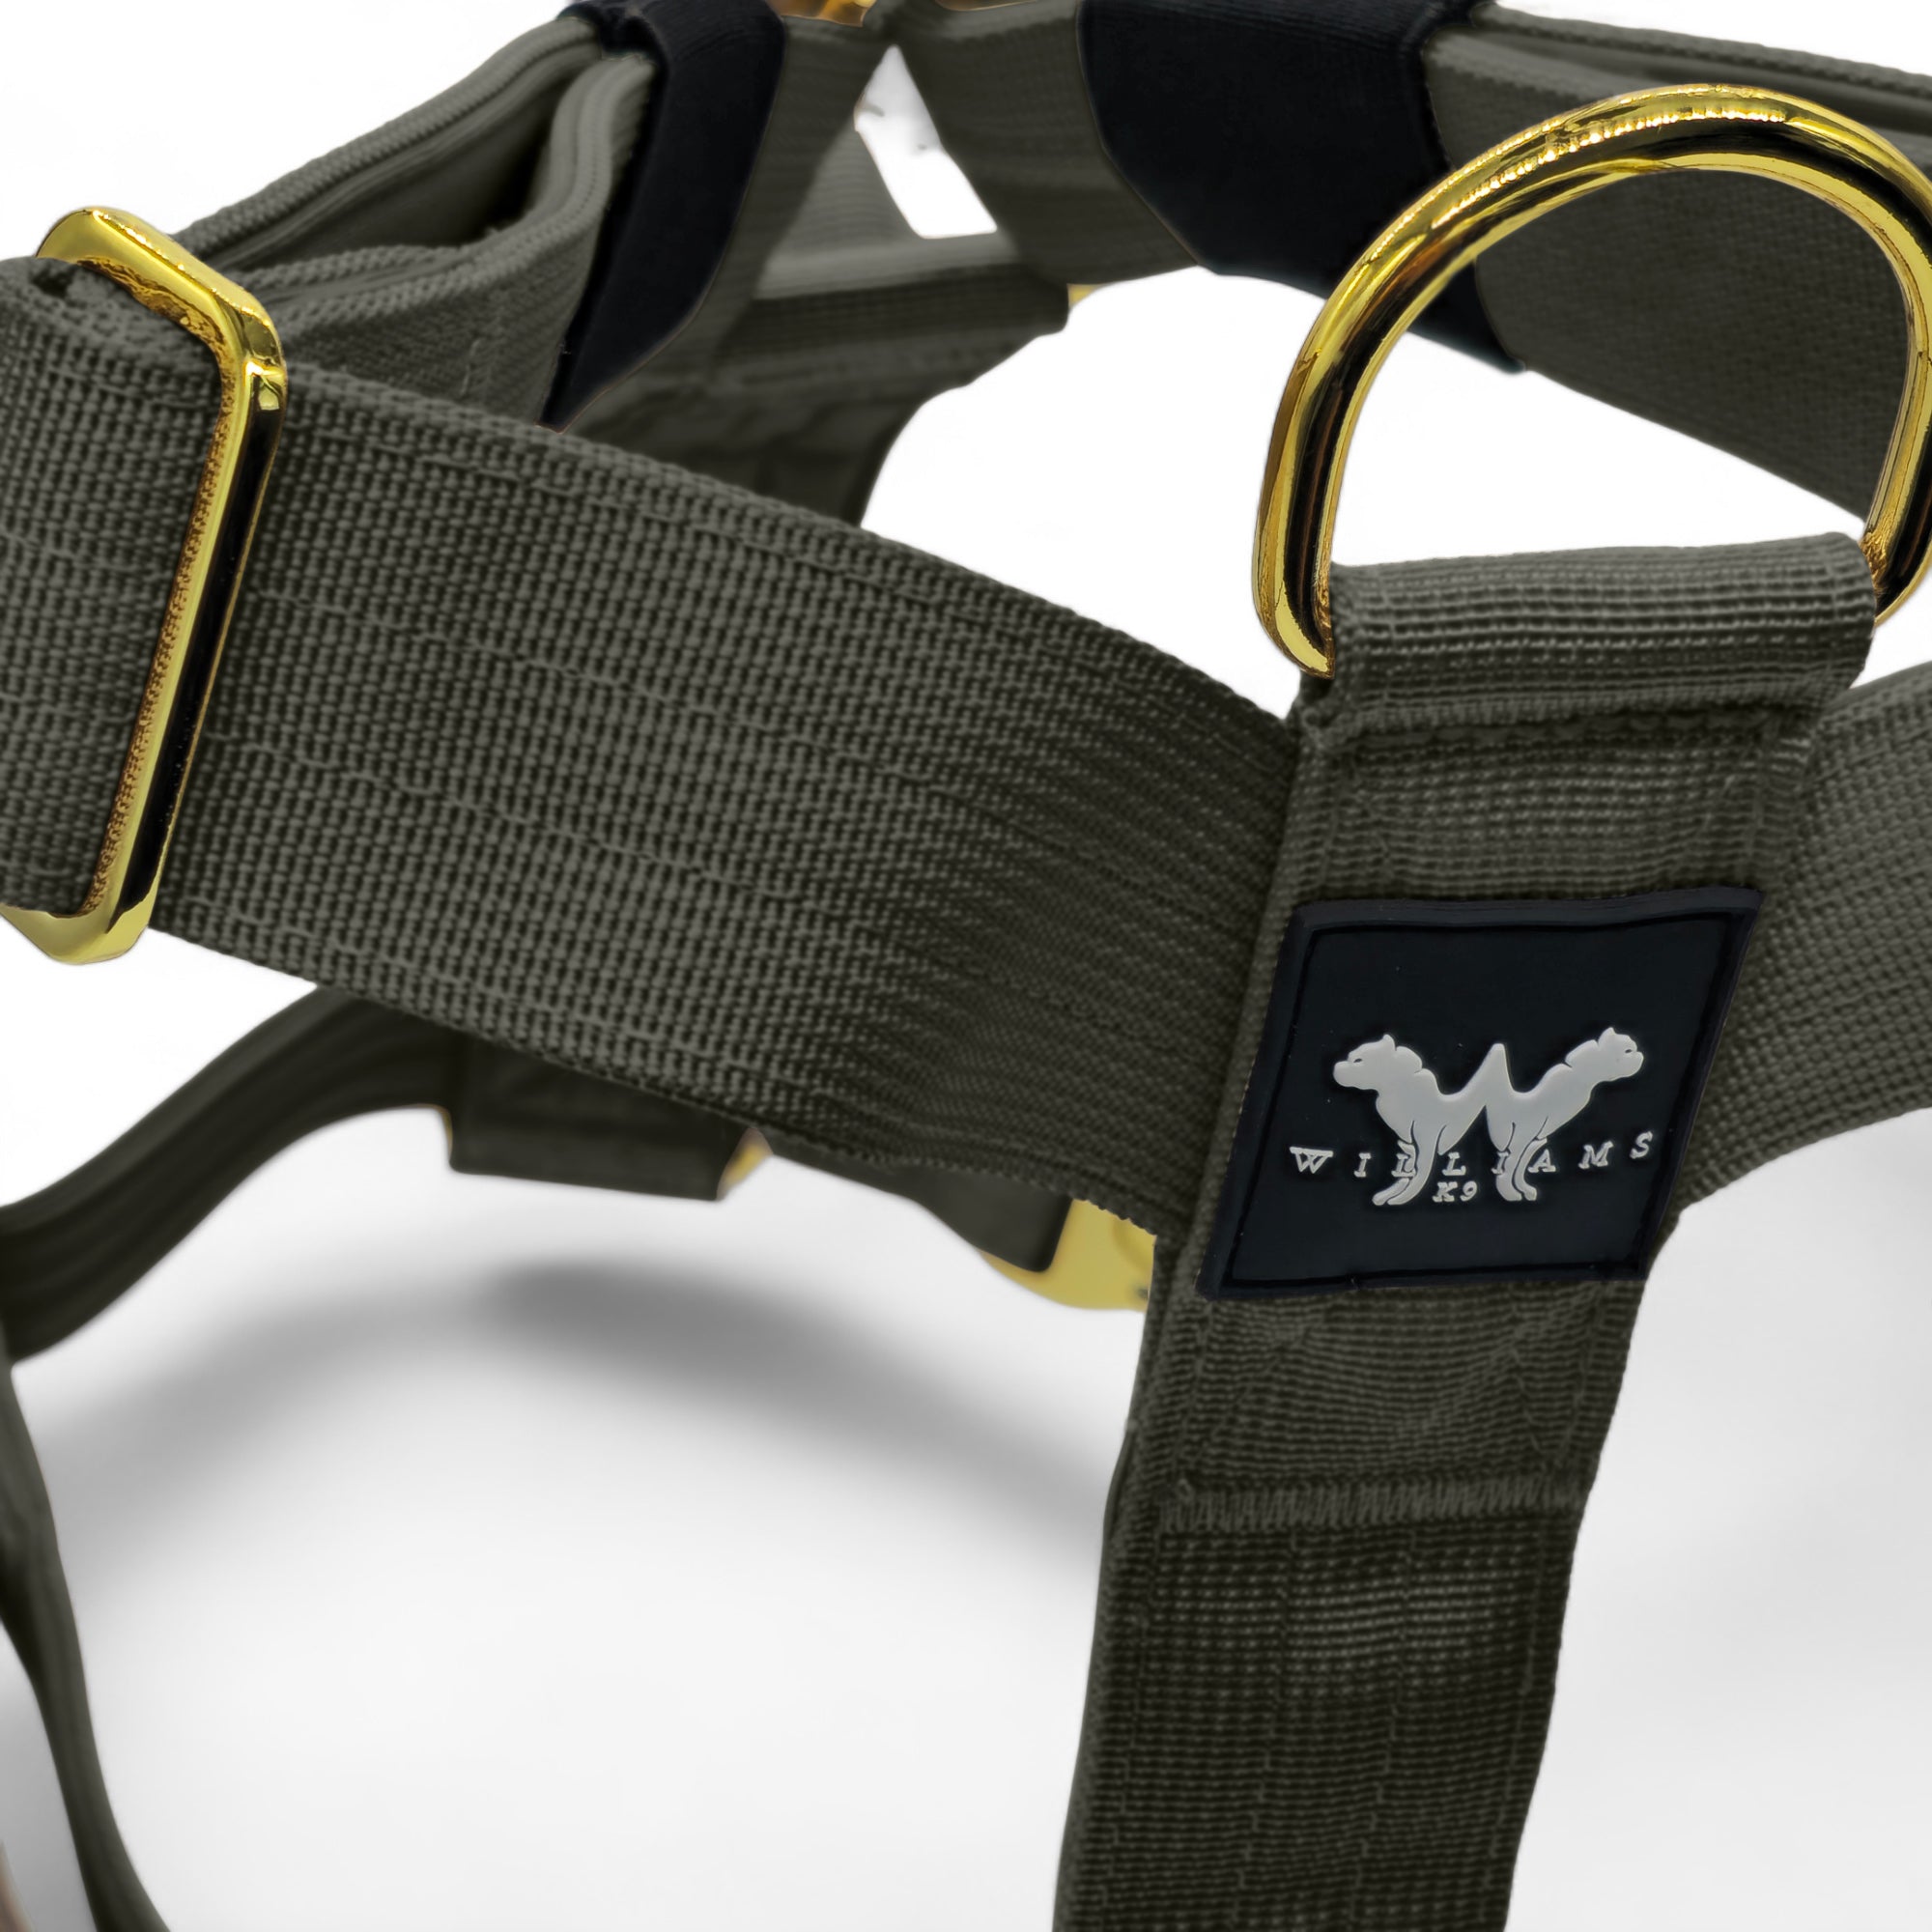 Anti-Pull Harness Khaki | Quad Stitched Nylon Adjustable With Control Handle